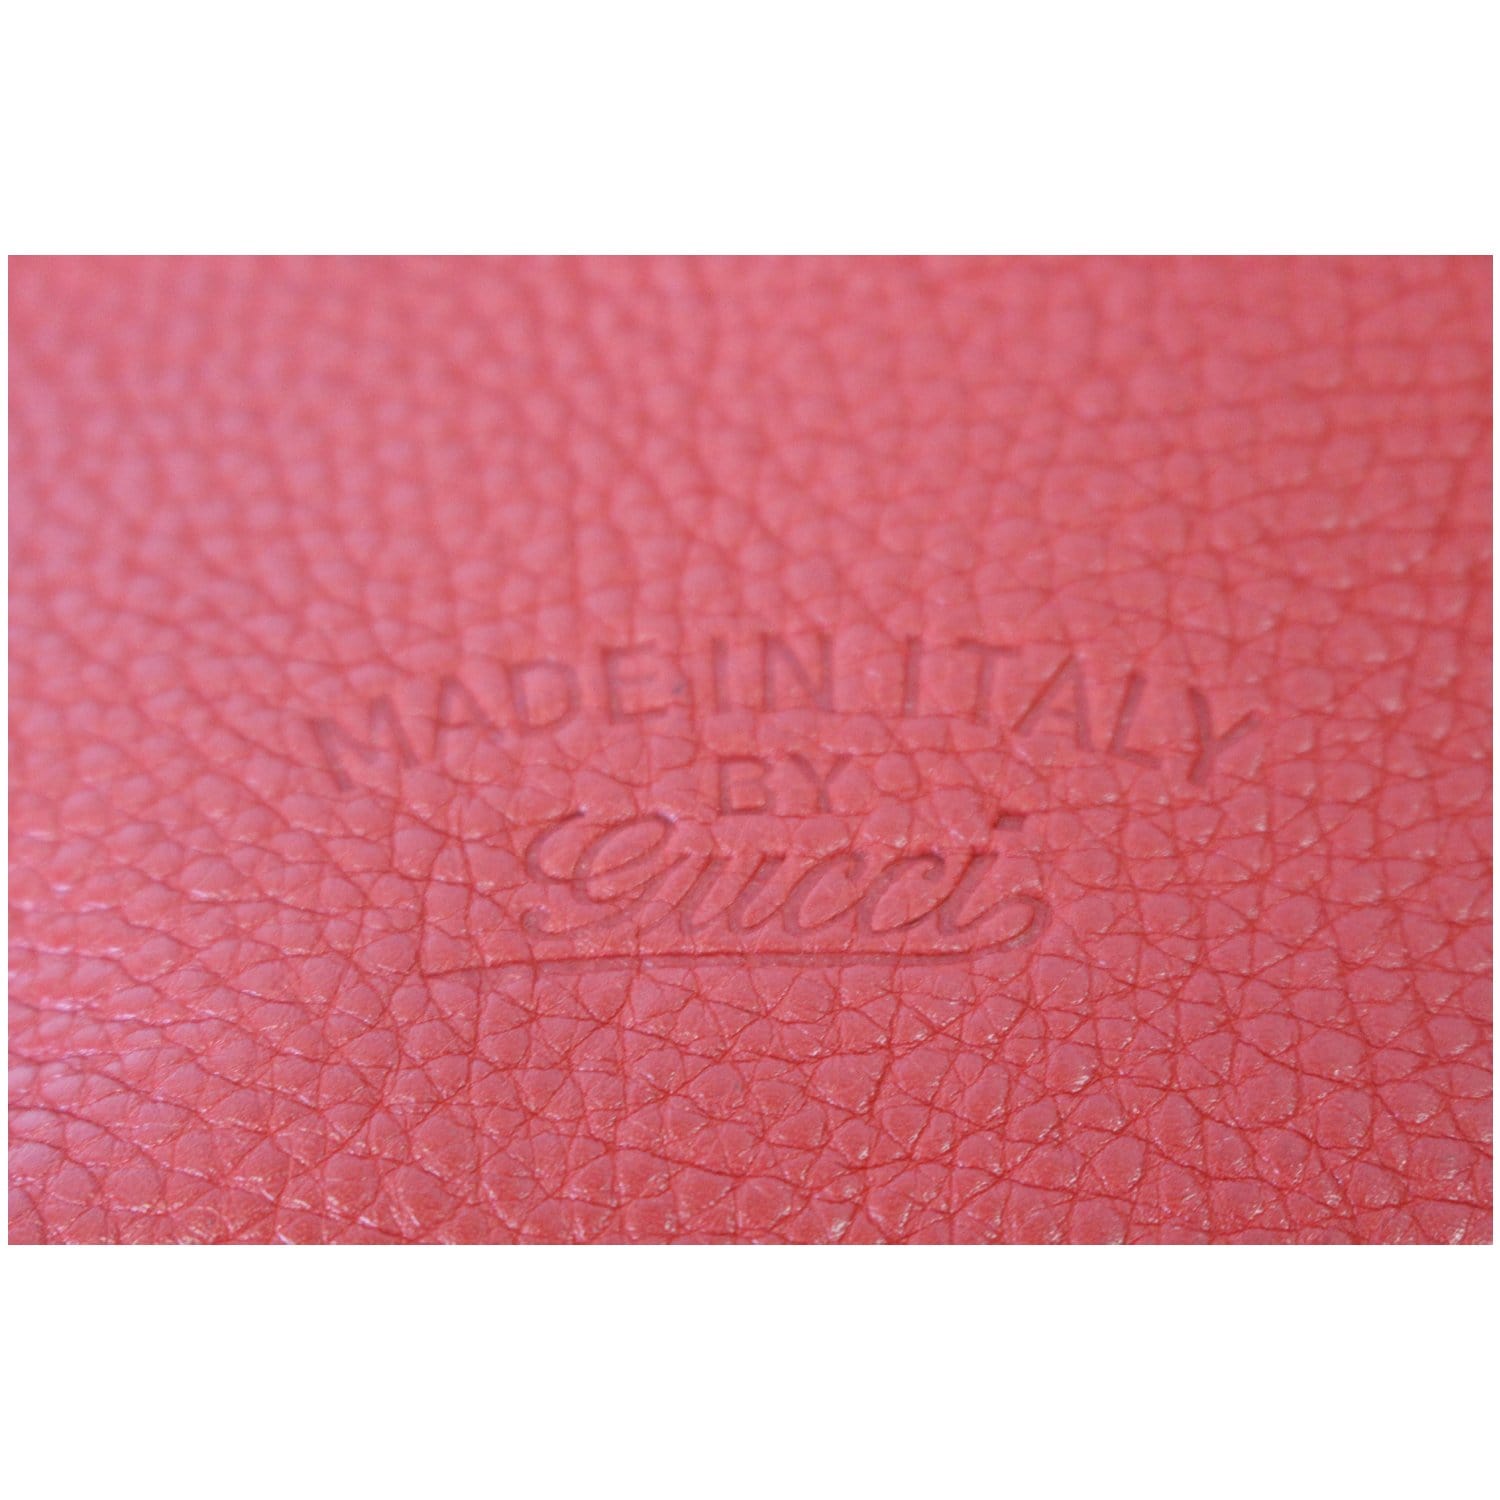 Gucci Leather - Neutrals Bucket Bags, Handbags - GUC1328125